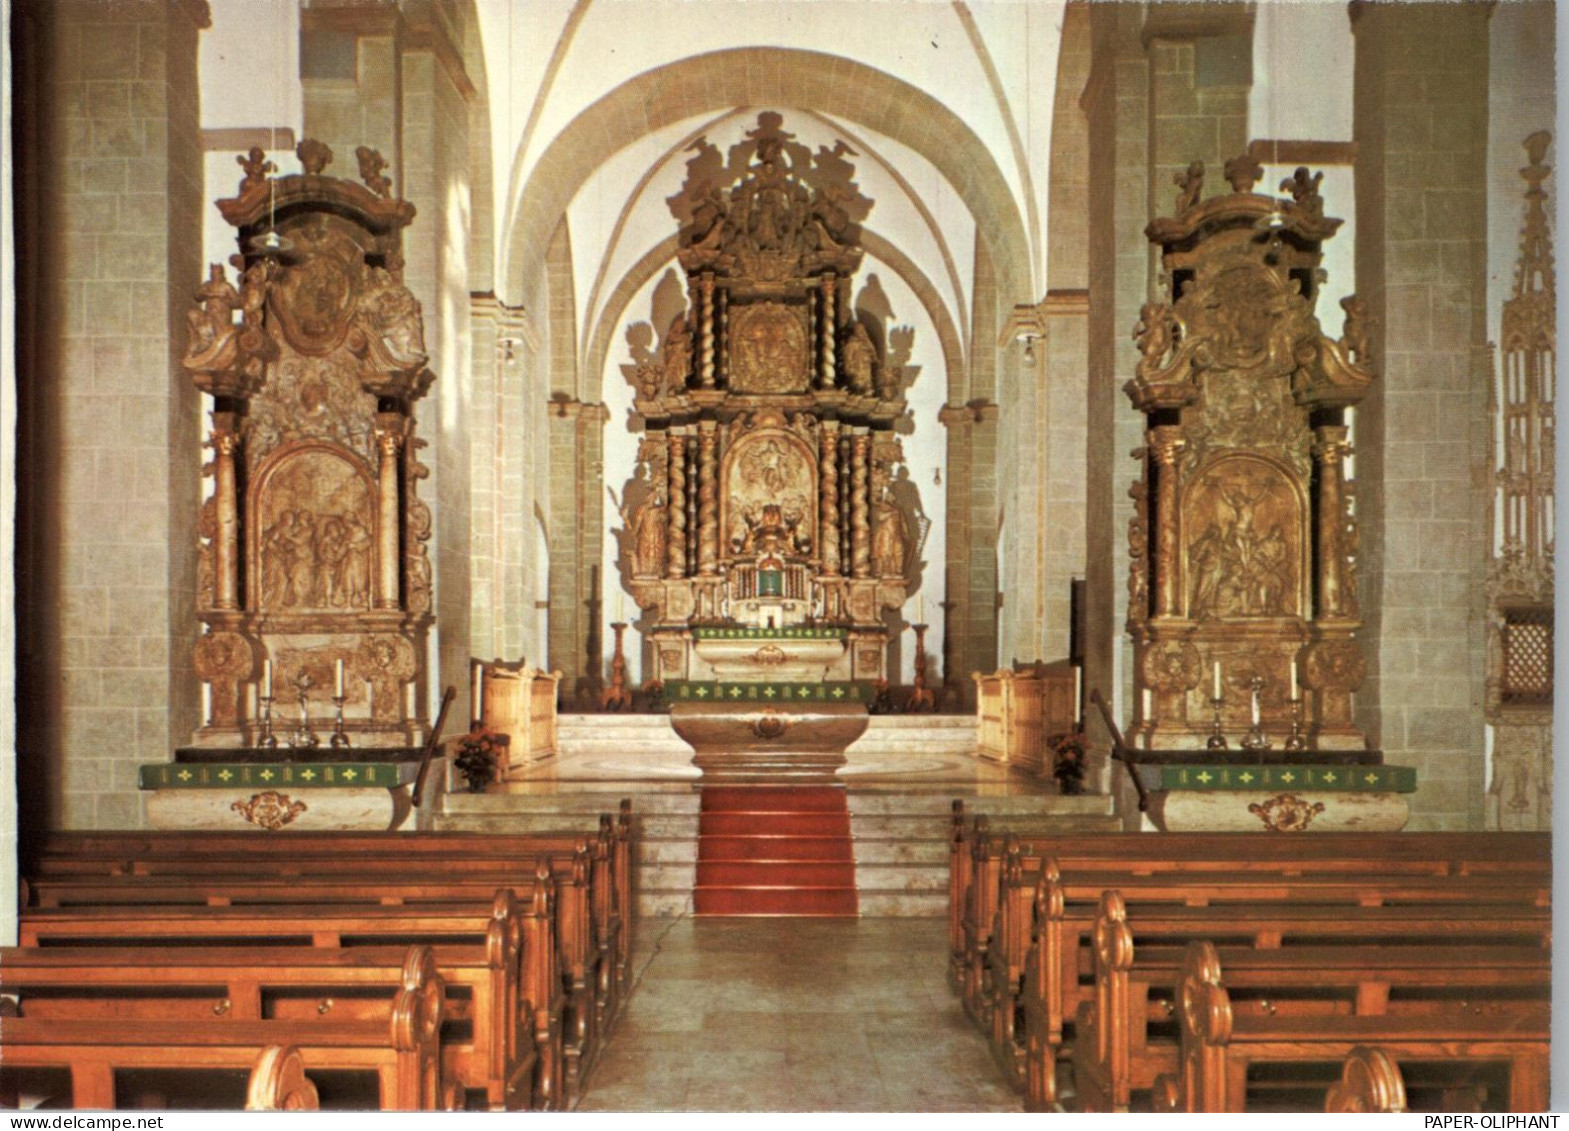 4787 GESEKE, Stiftskirche, Papenaltare - Soest